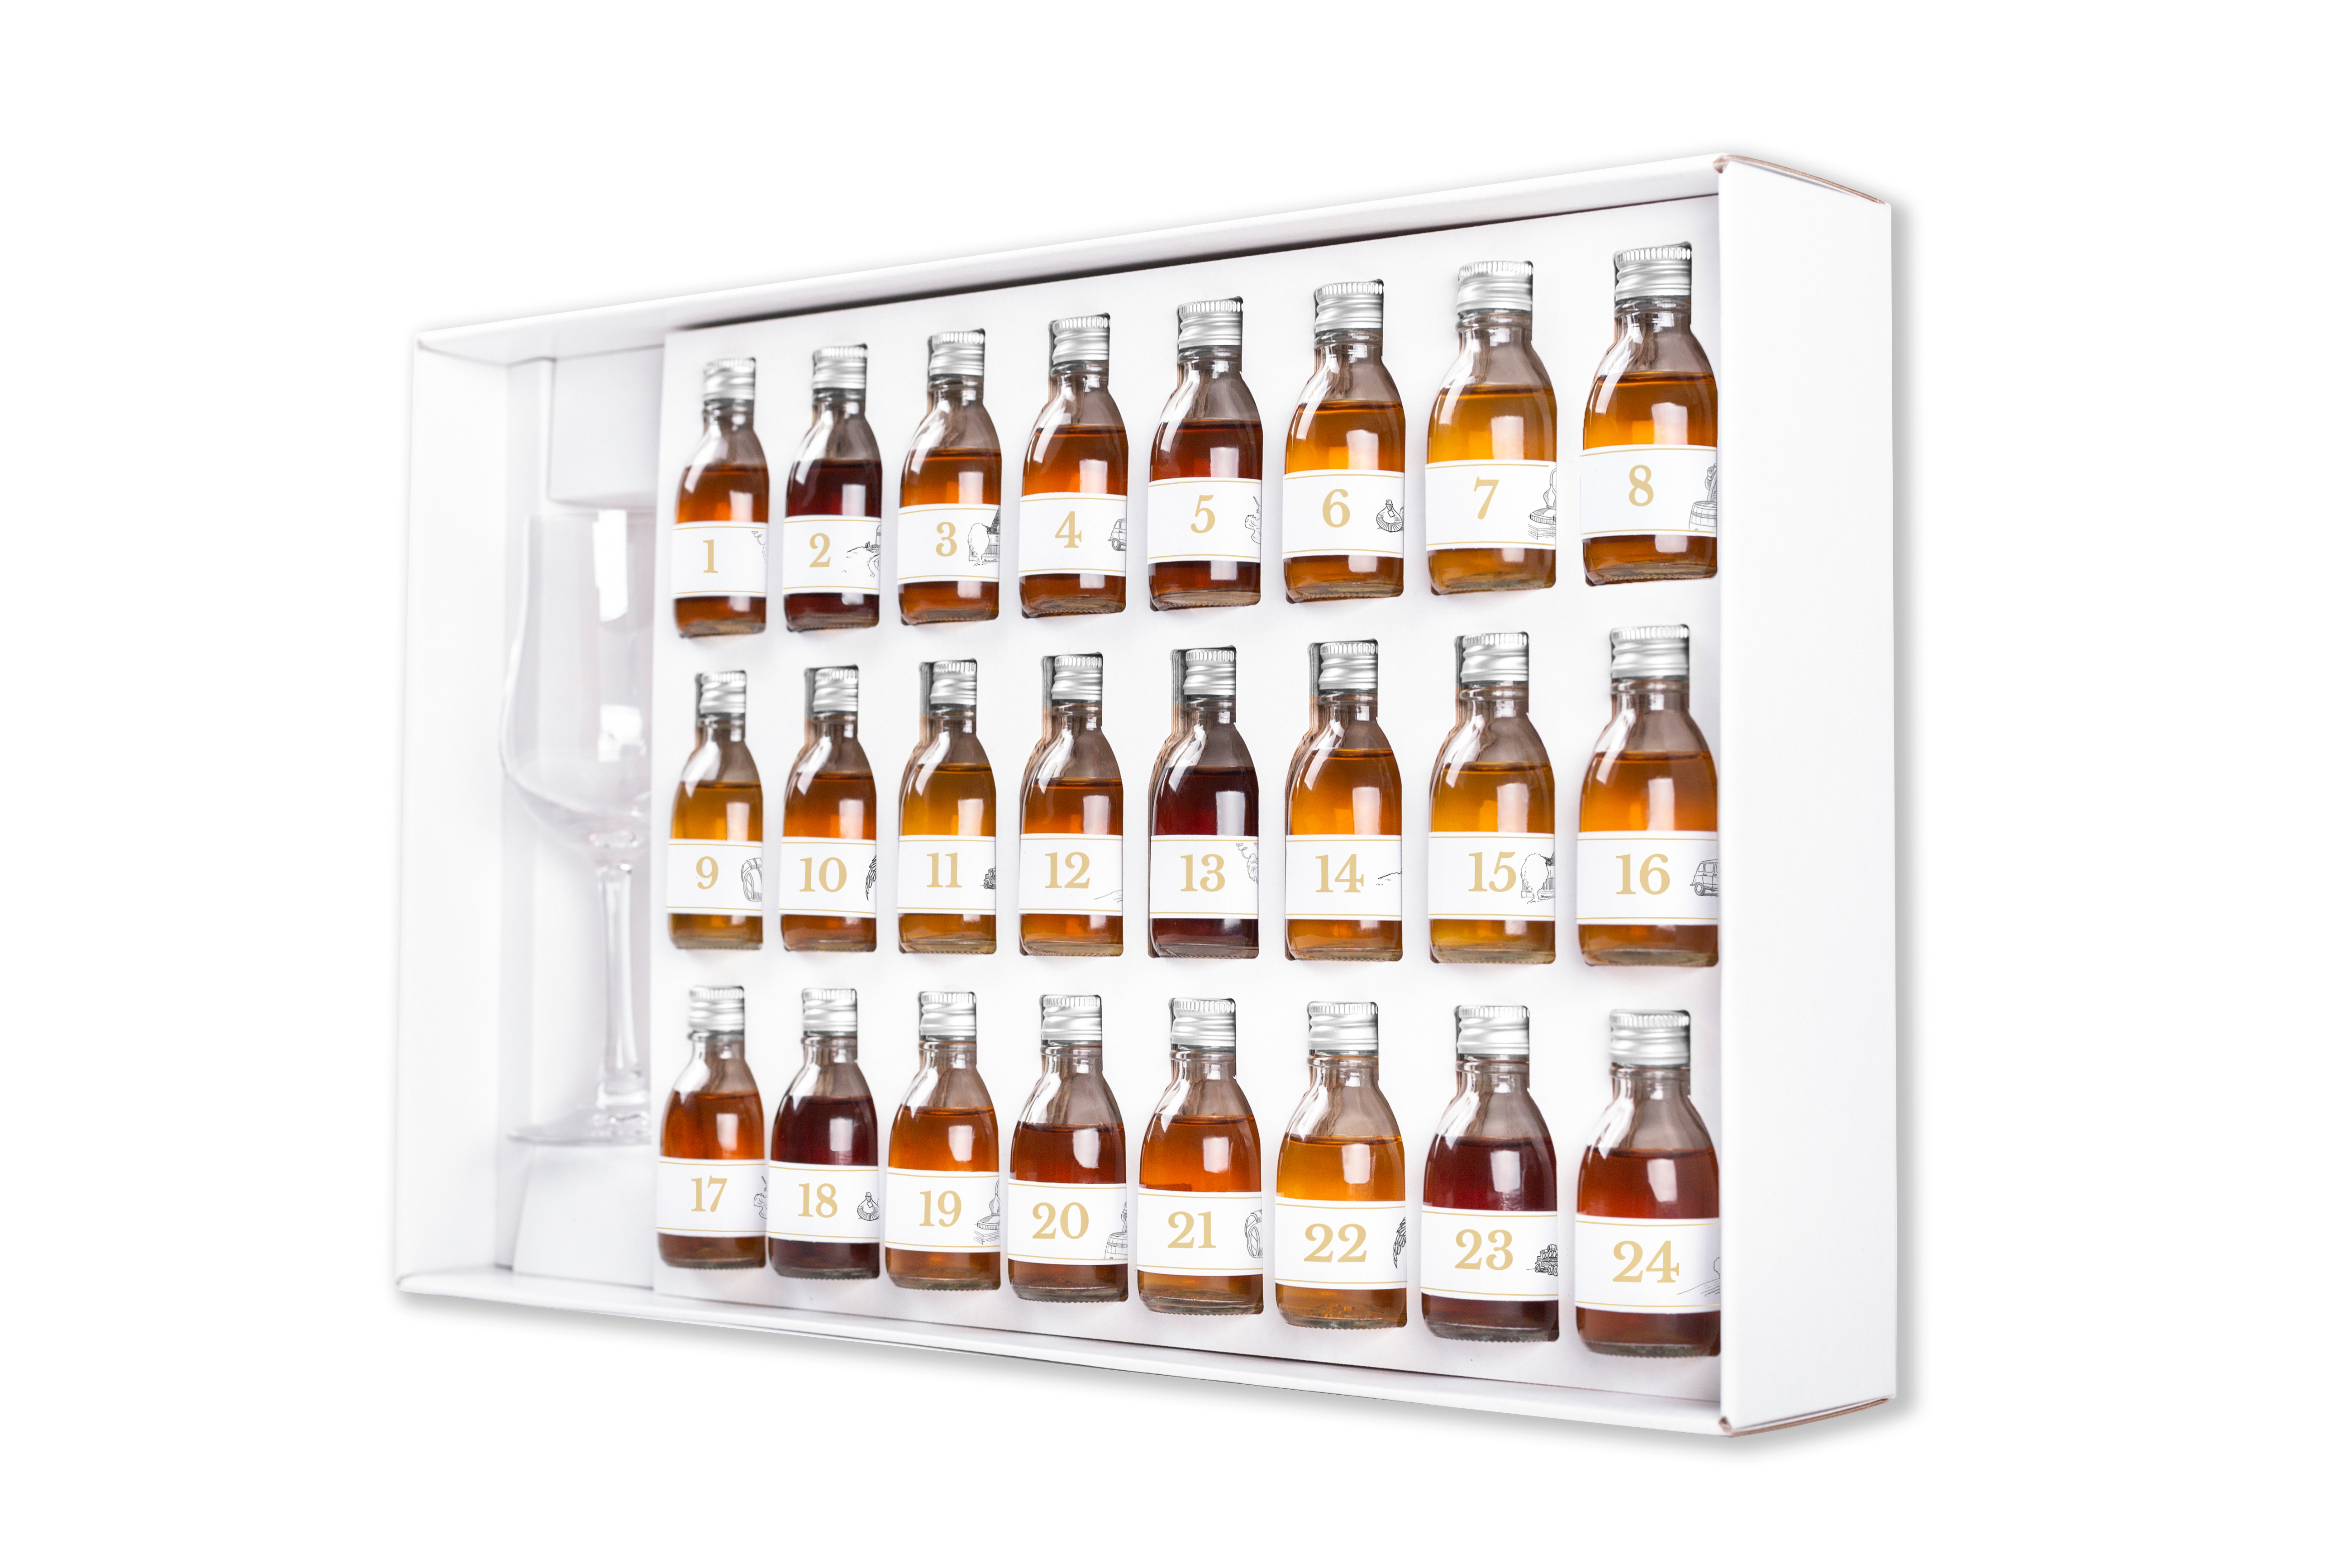 Cognac Expert Calendar 2020 in box